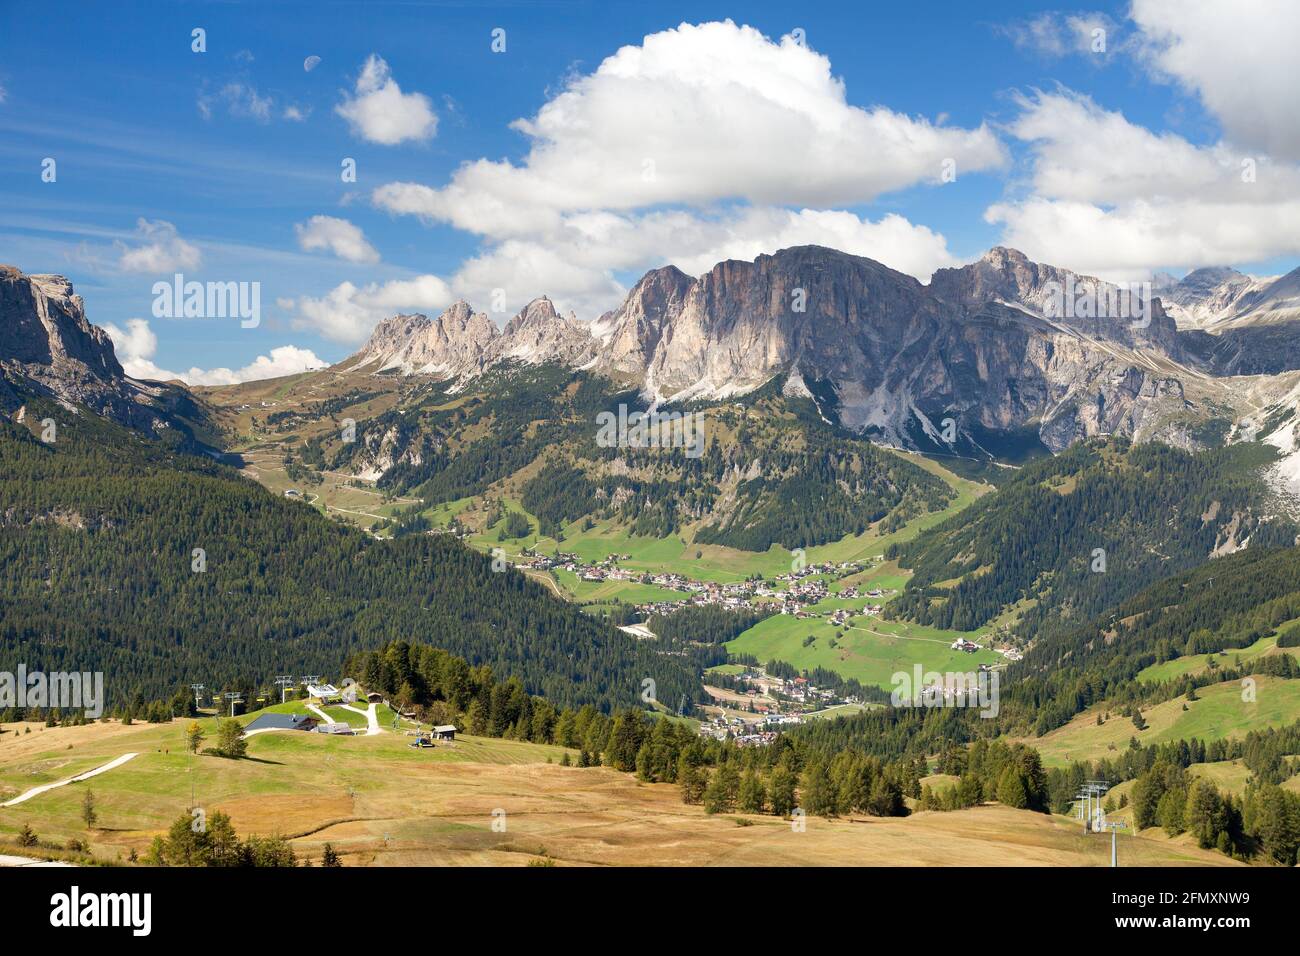 Corvara in Badia, passo gardena alias grodner joch, Alps Dolomites mountains, Italy Stock Photo